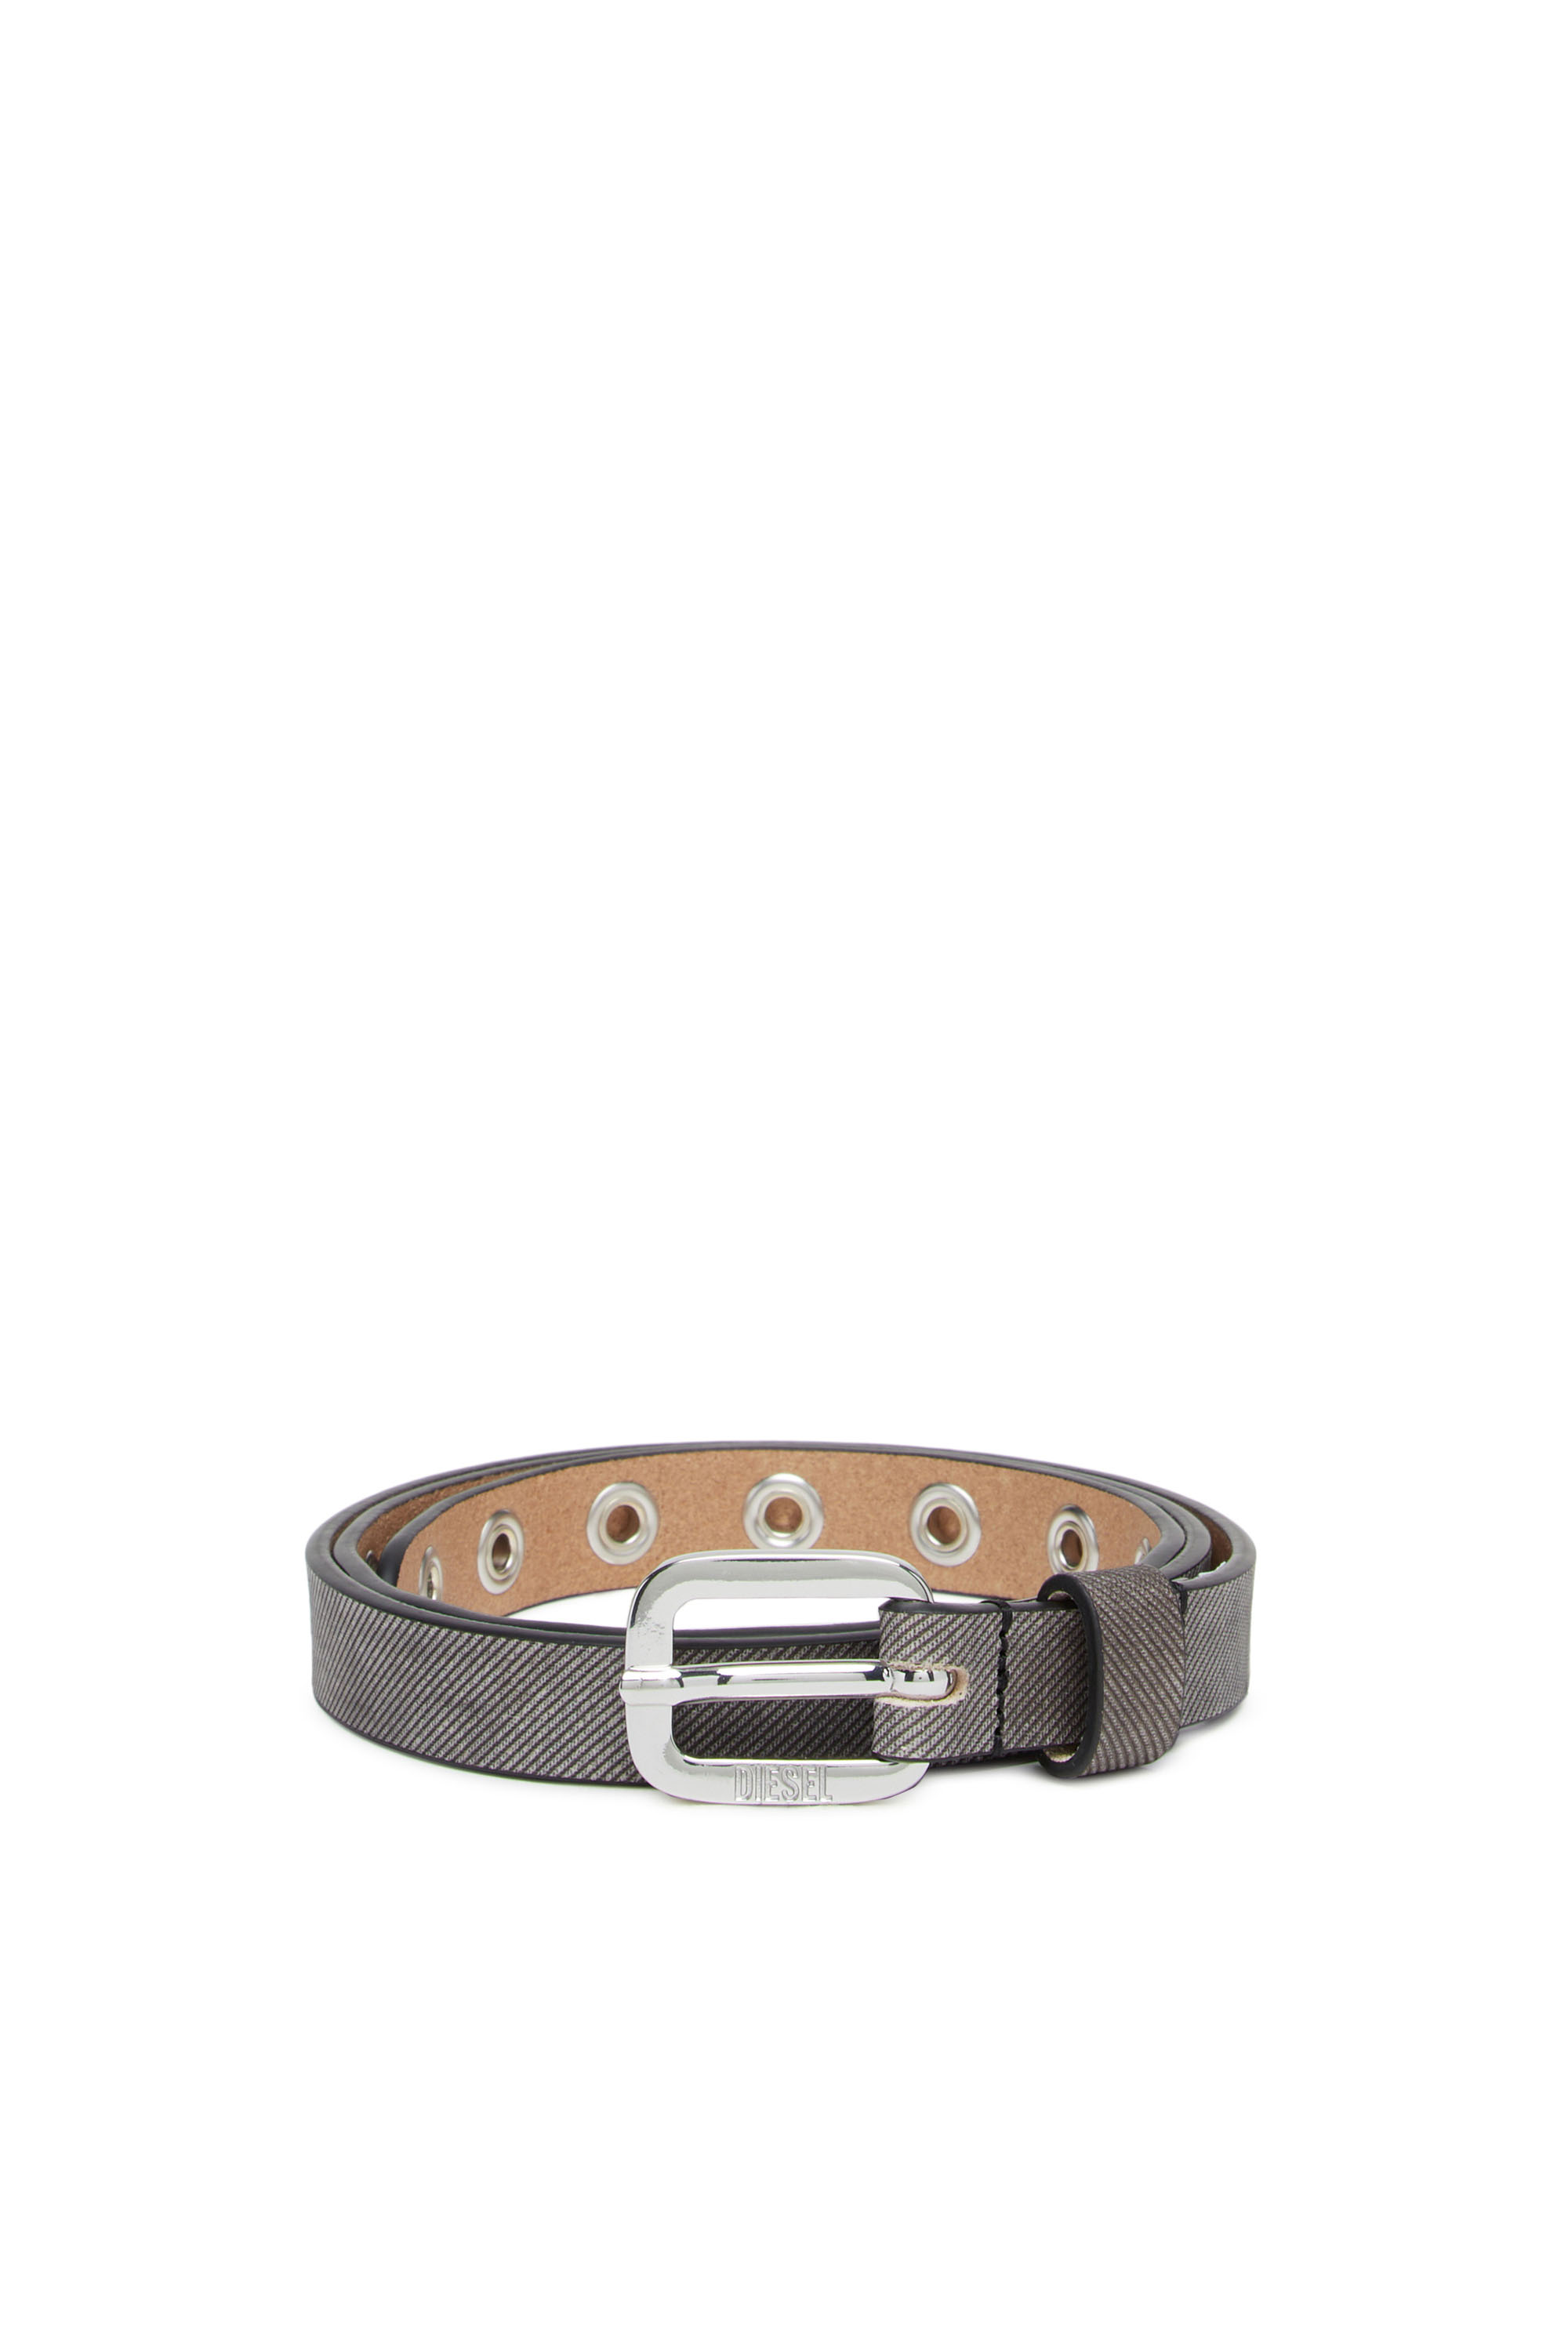 Silver D Ring 1 1/827mm Metal D Buckle Belt Strap Buckle Webbing D Ring  Handbag Accessories Leather Craft Hardware -  Denmark